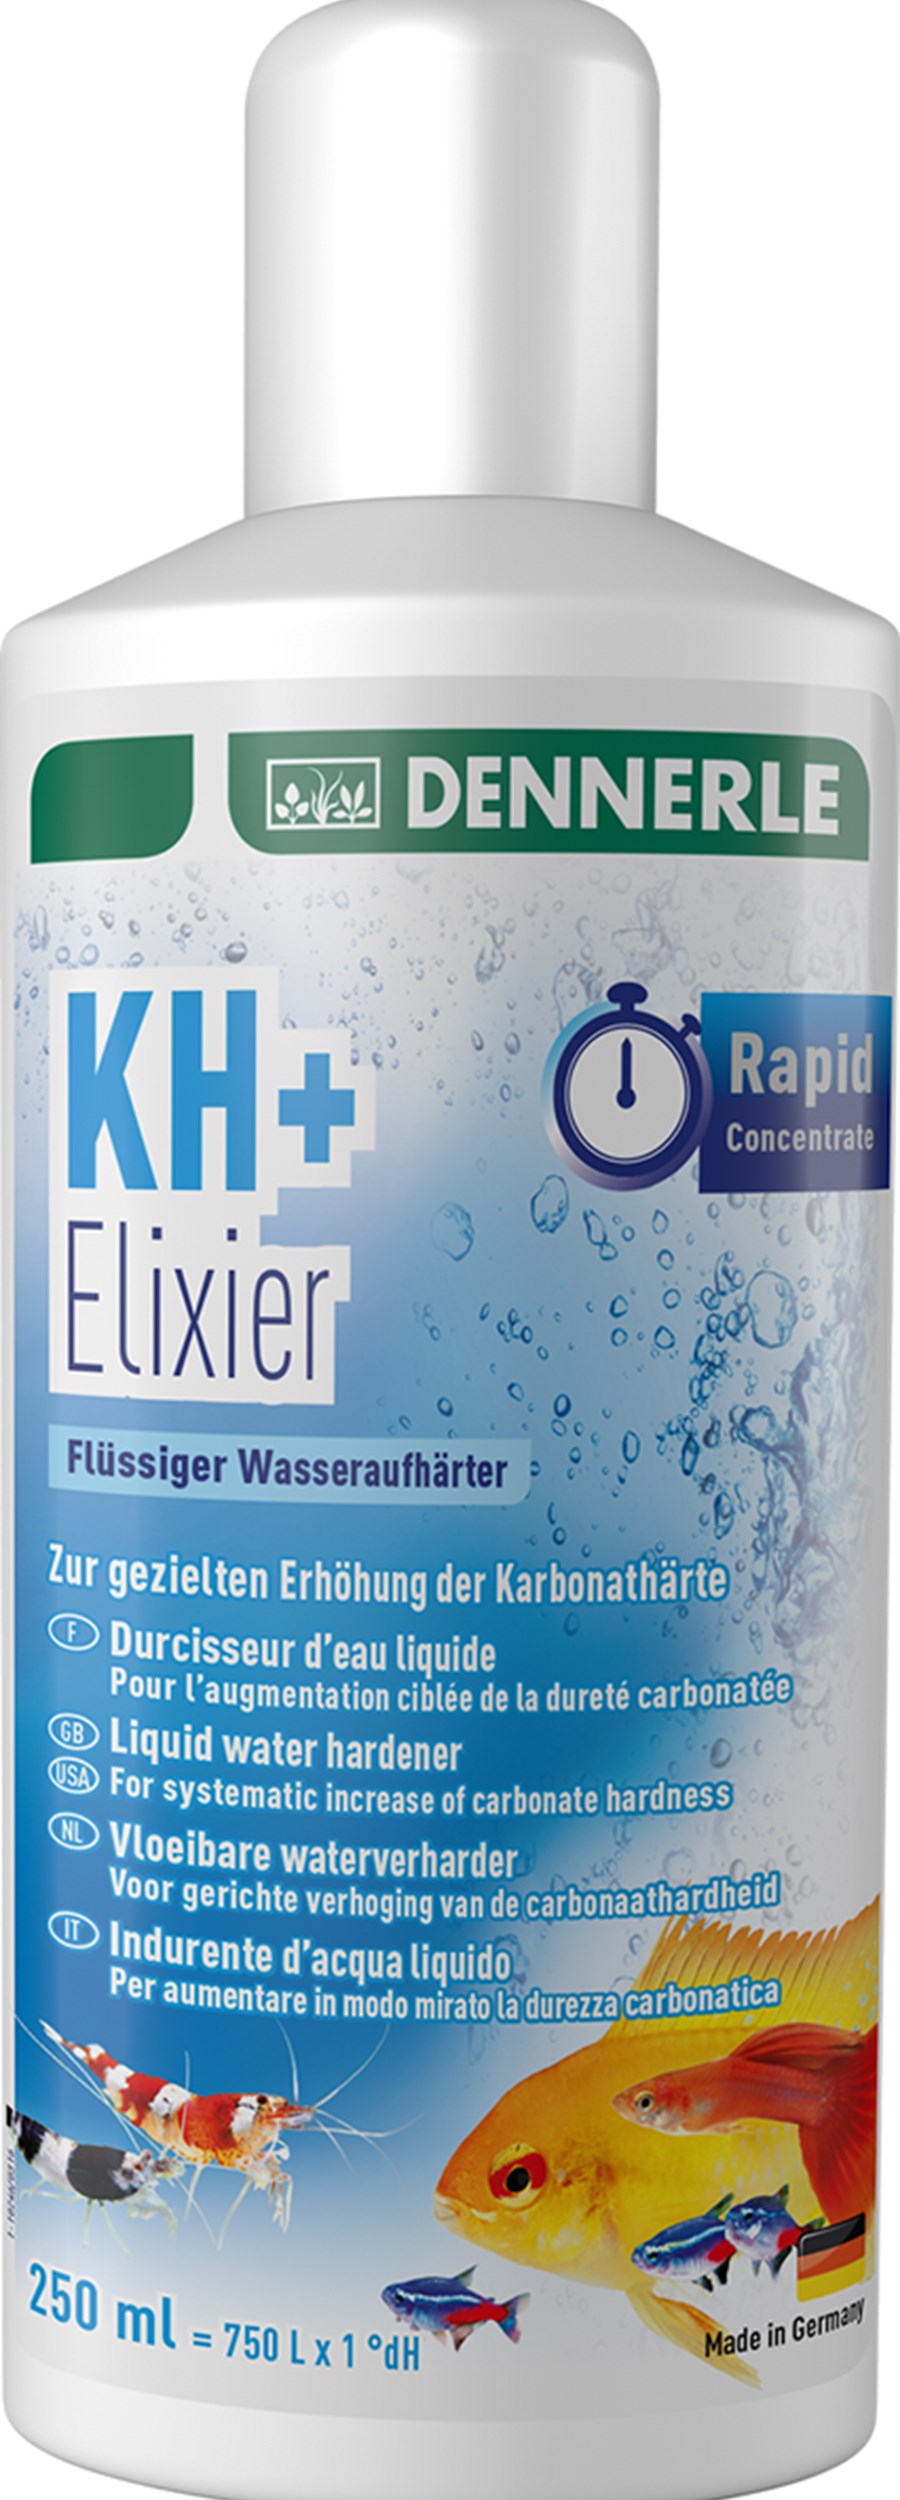 KH+ Elixier 250ml